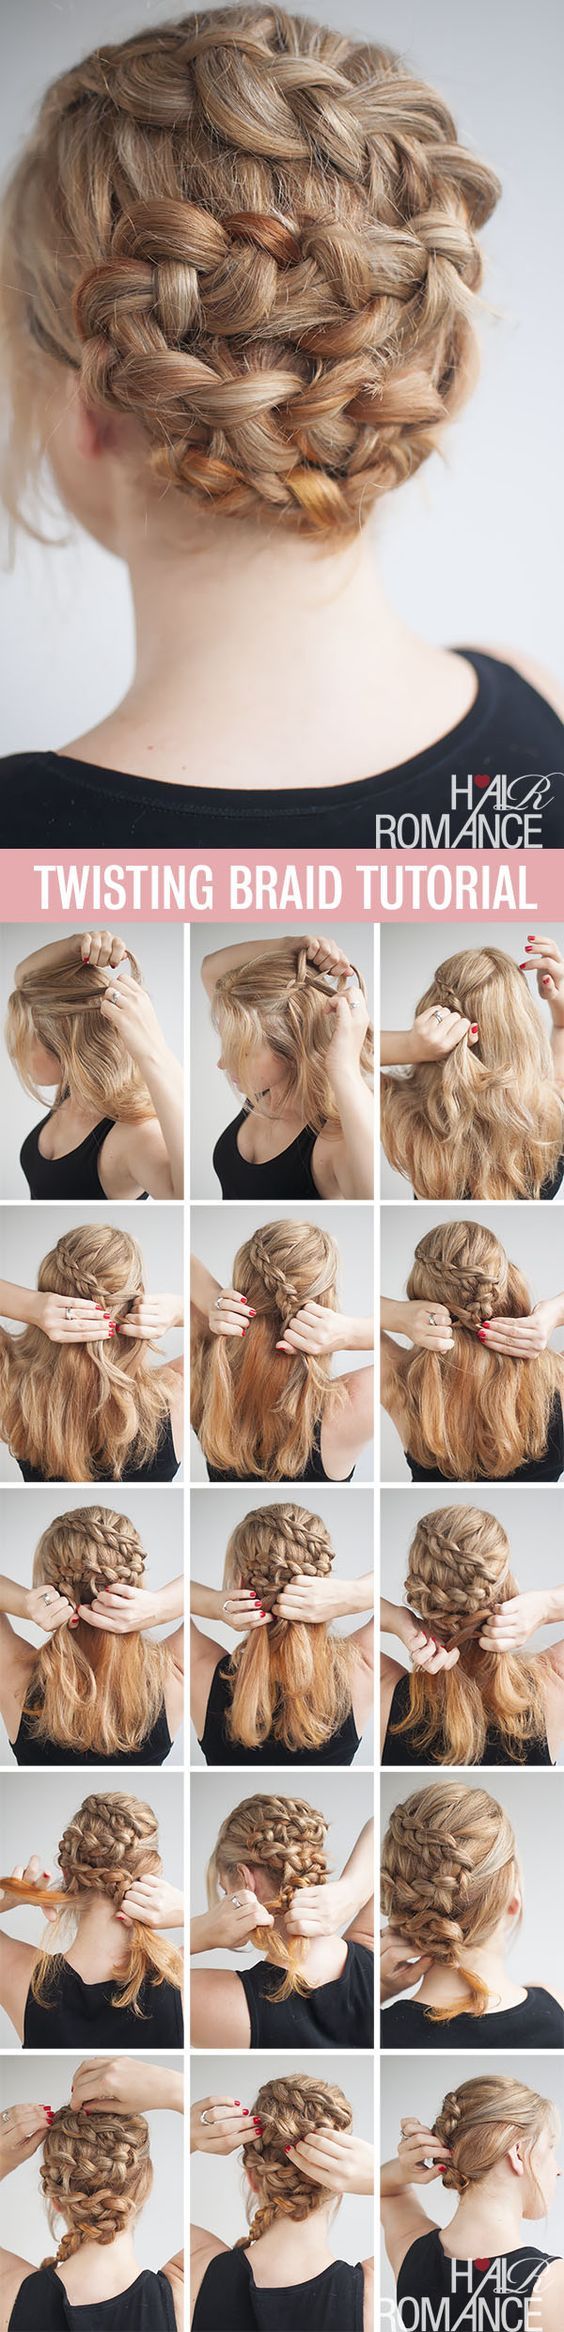 Twisting braid hairstyle tutorial